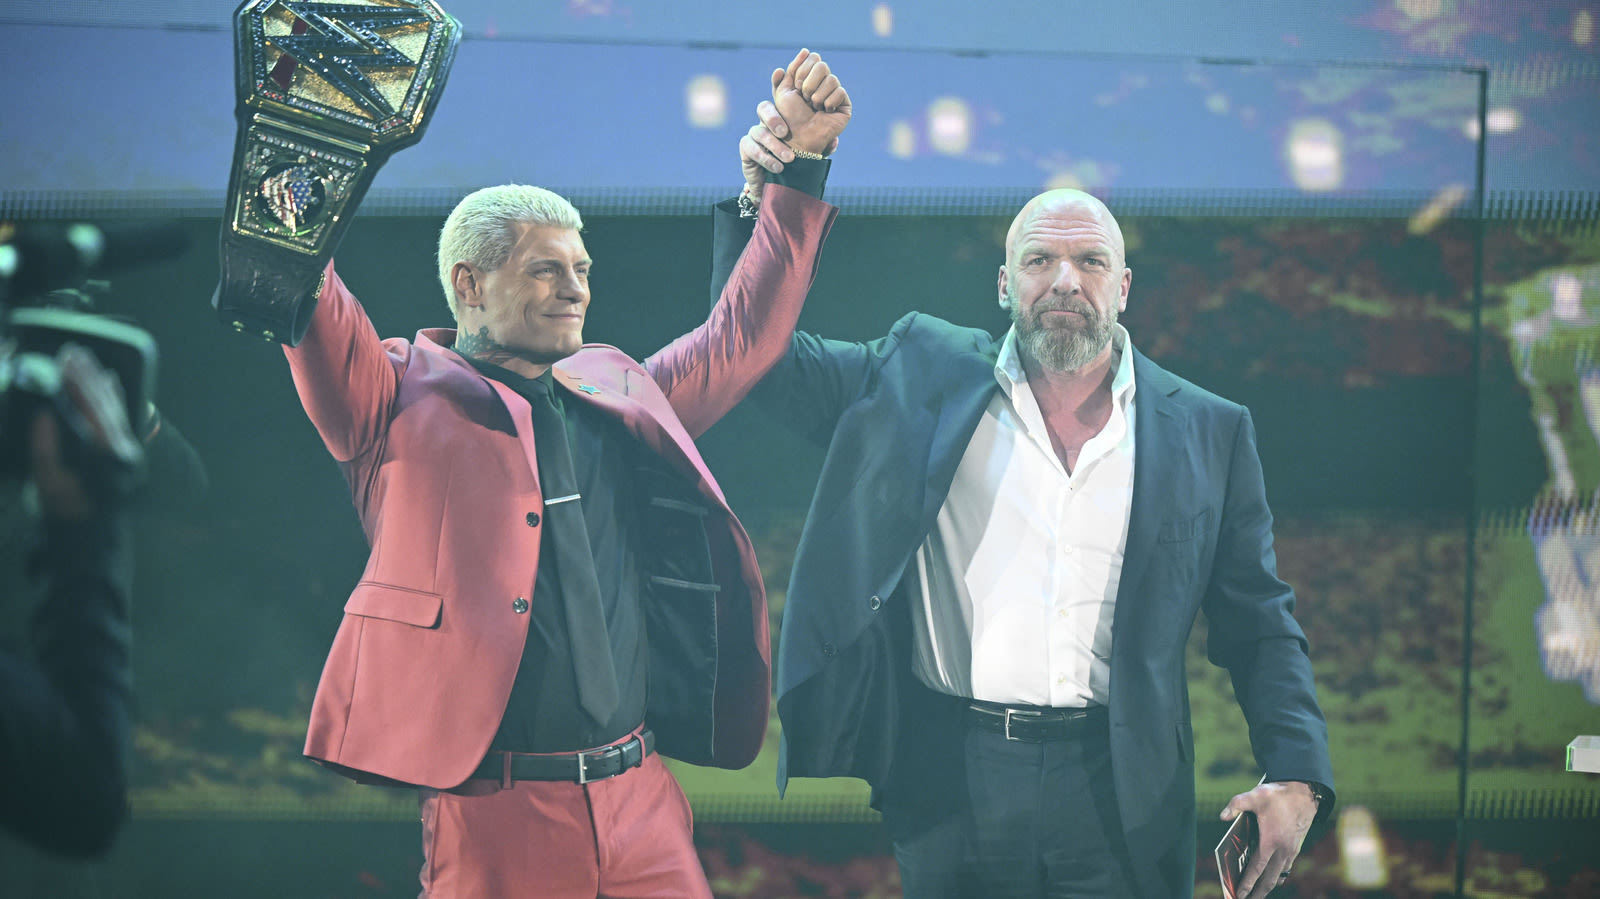 Eric Bischoff Addresses WWE's Post-WrestleMania 'Reset' - Wrestling Inc.